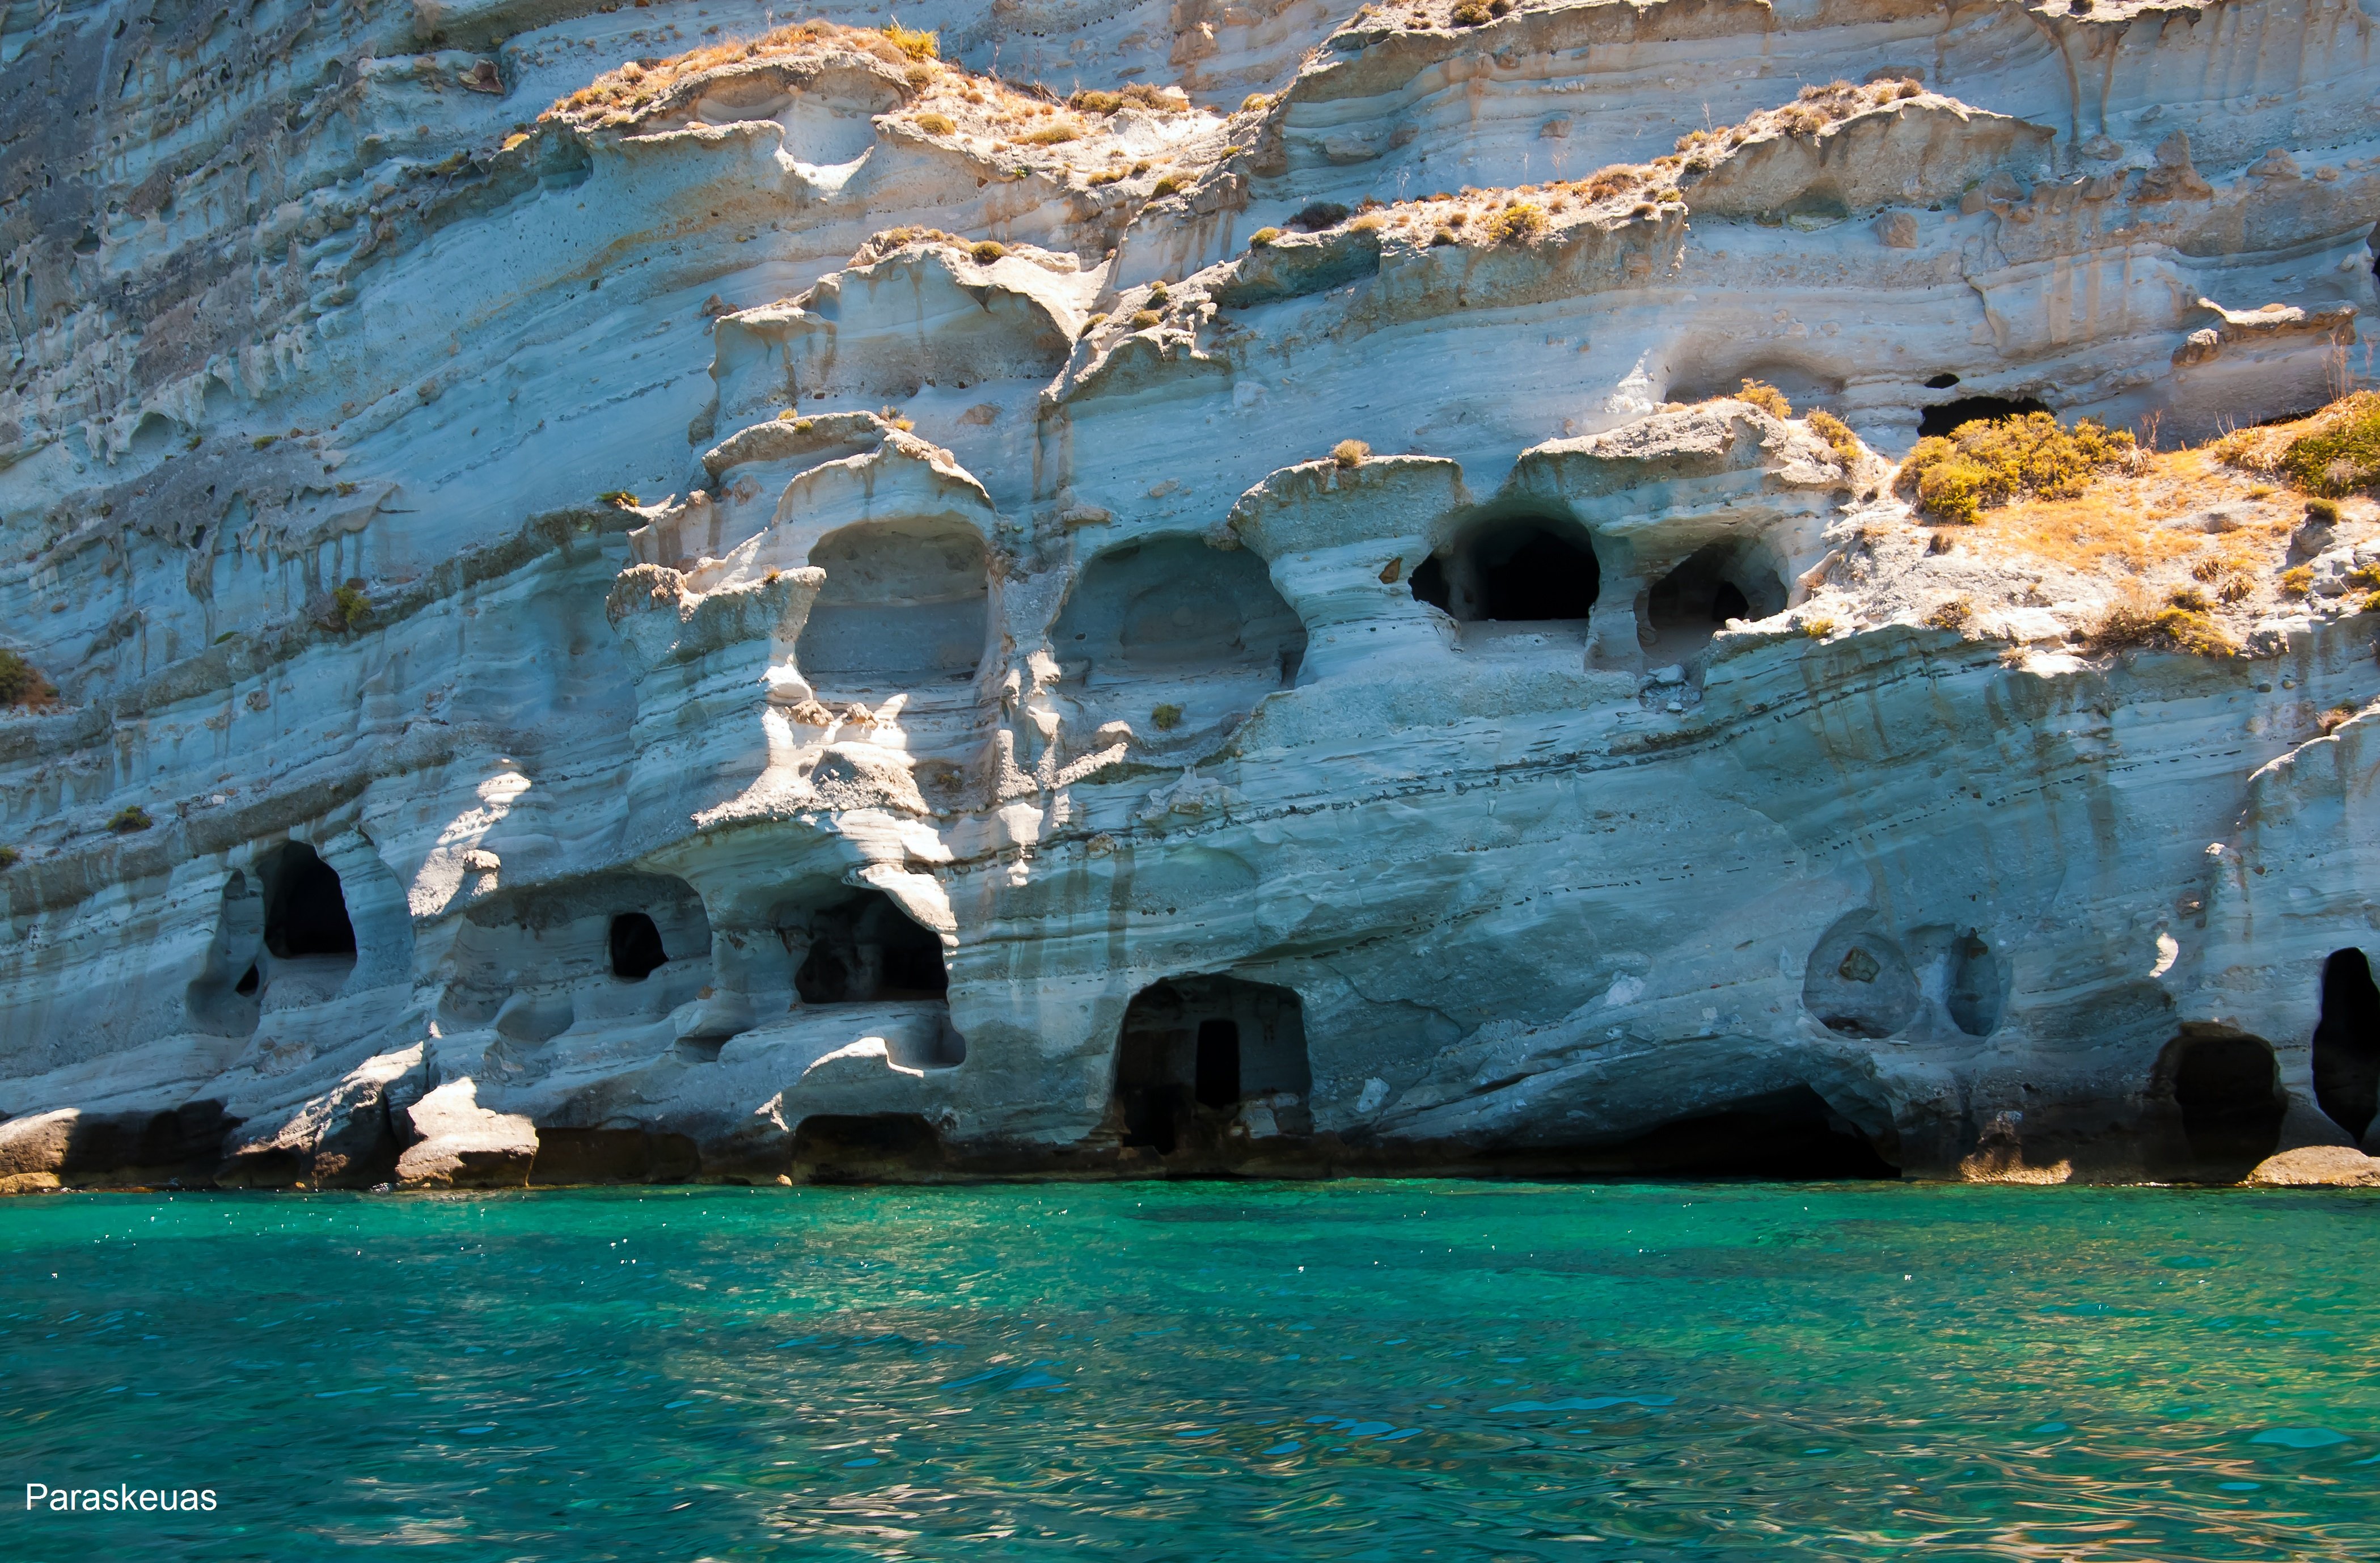 milos island greece catacombs (4) 